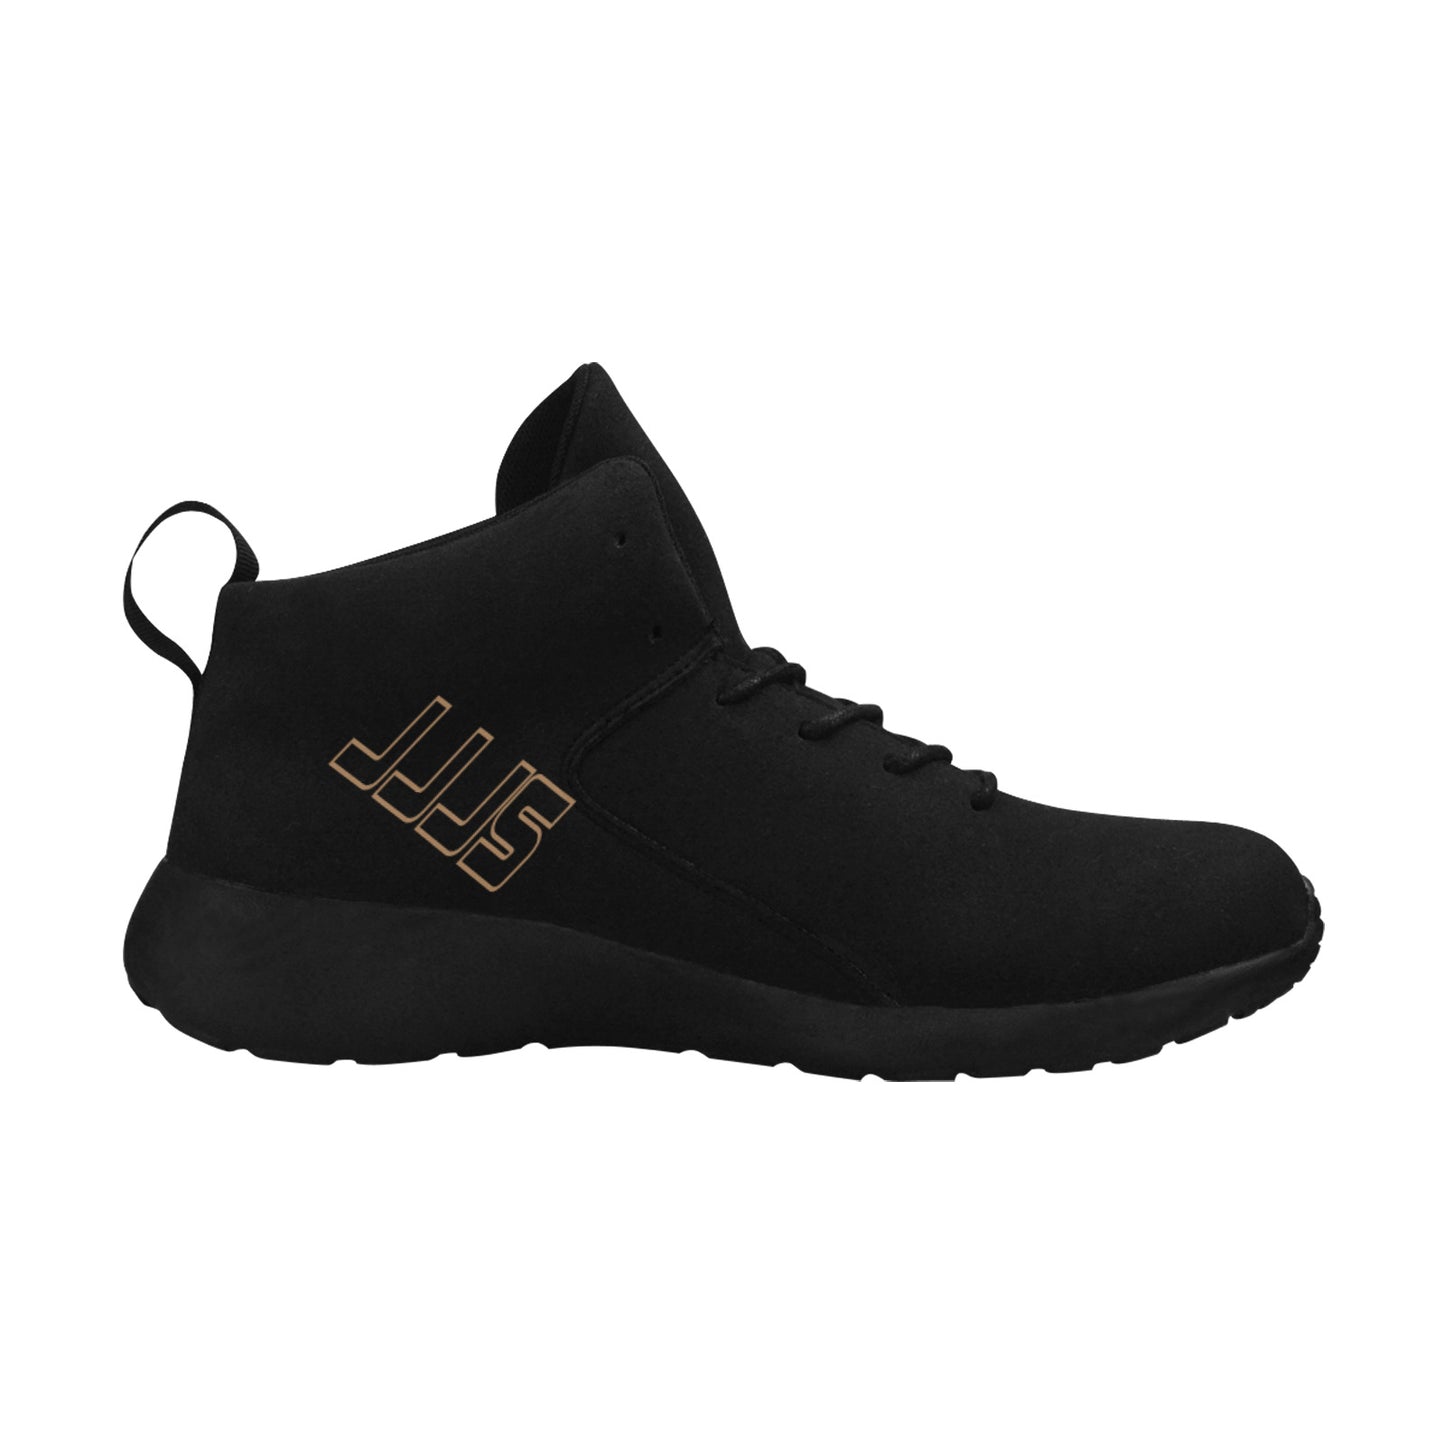 JJJs Black Men's Basketball Shoes